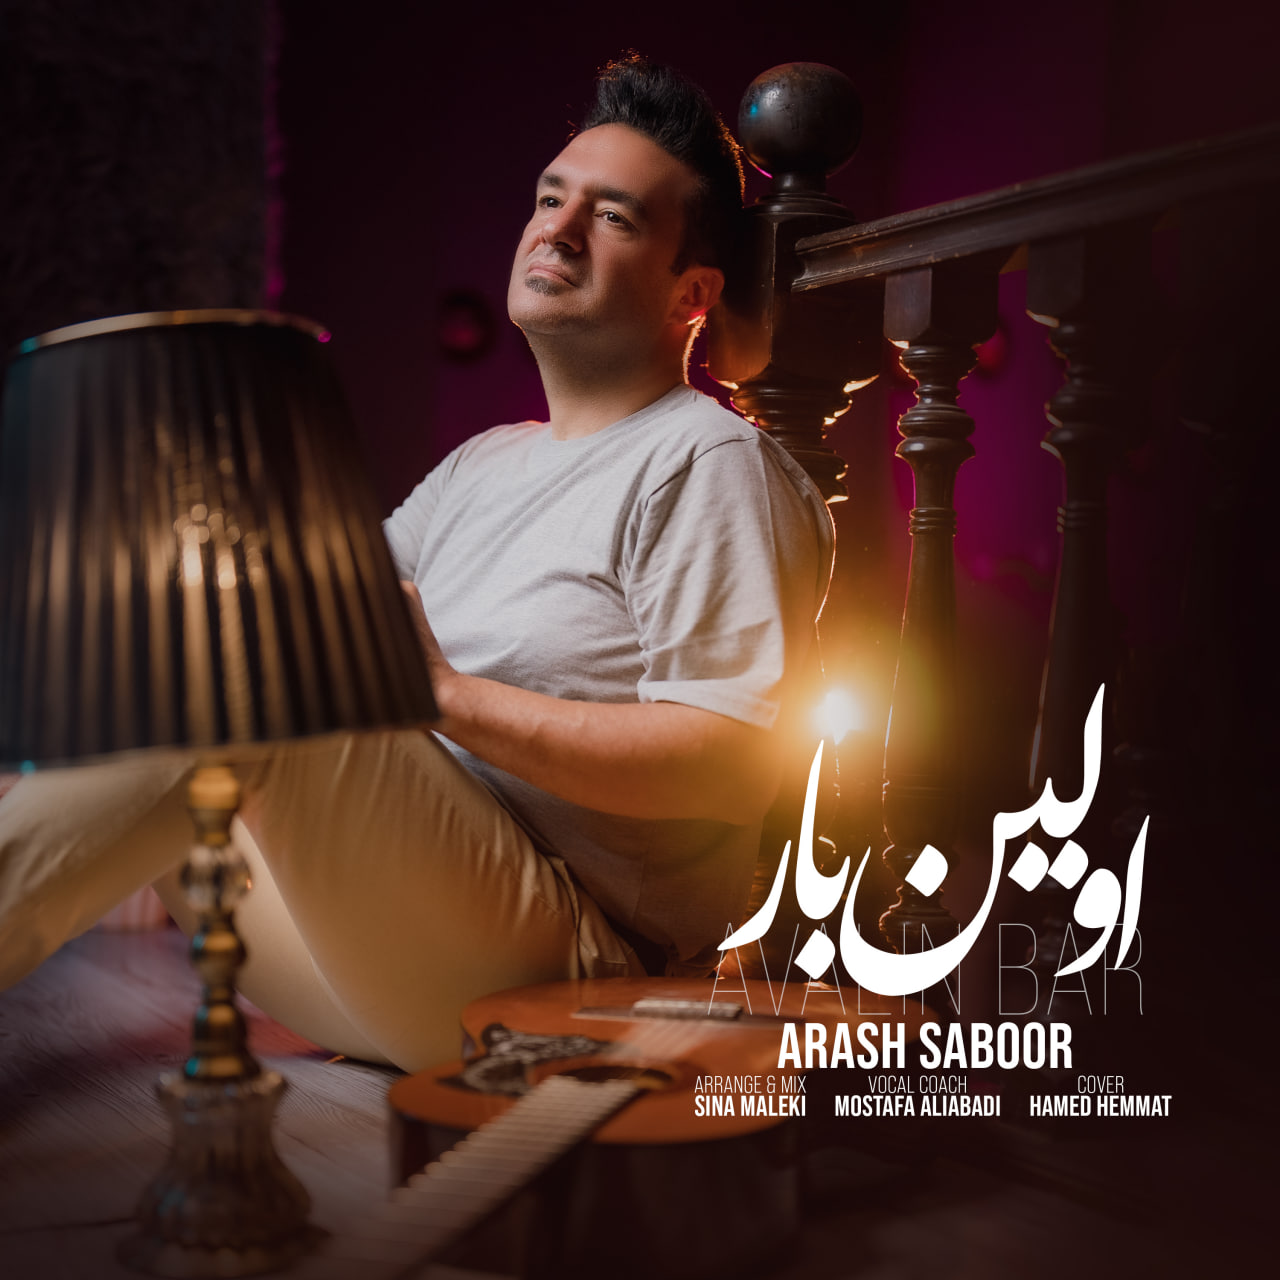 Arash Saboor – Avalin Bar